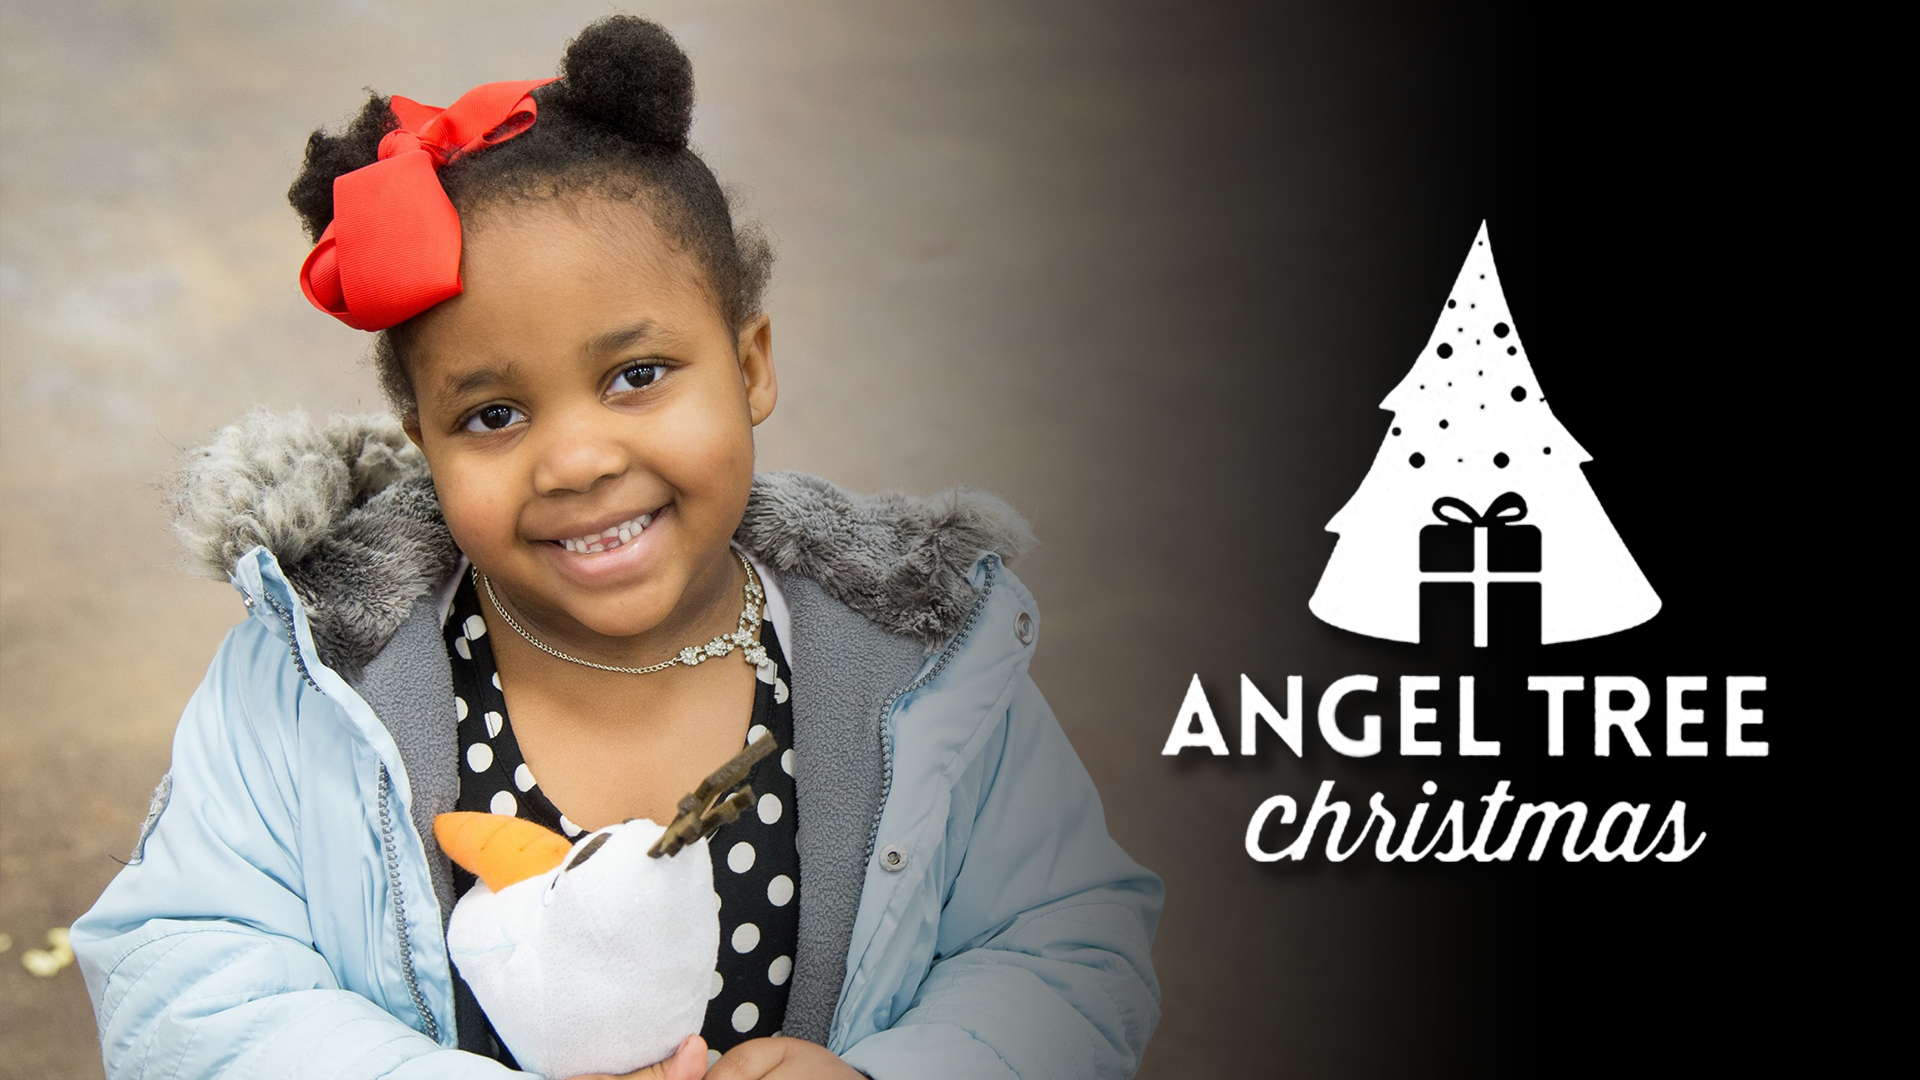 Christmas Initiatives 2021 - Angel Tree Christmas